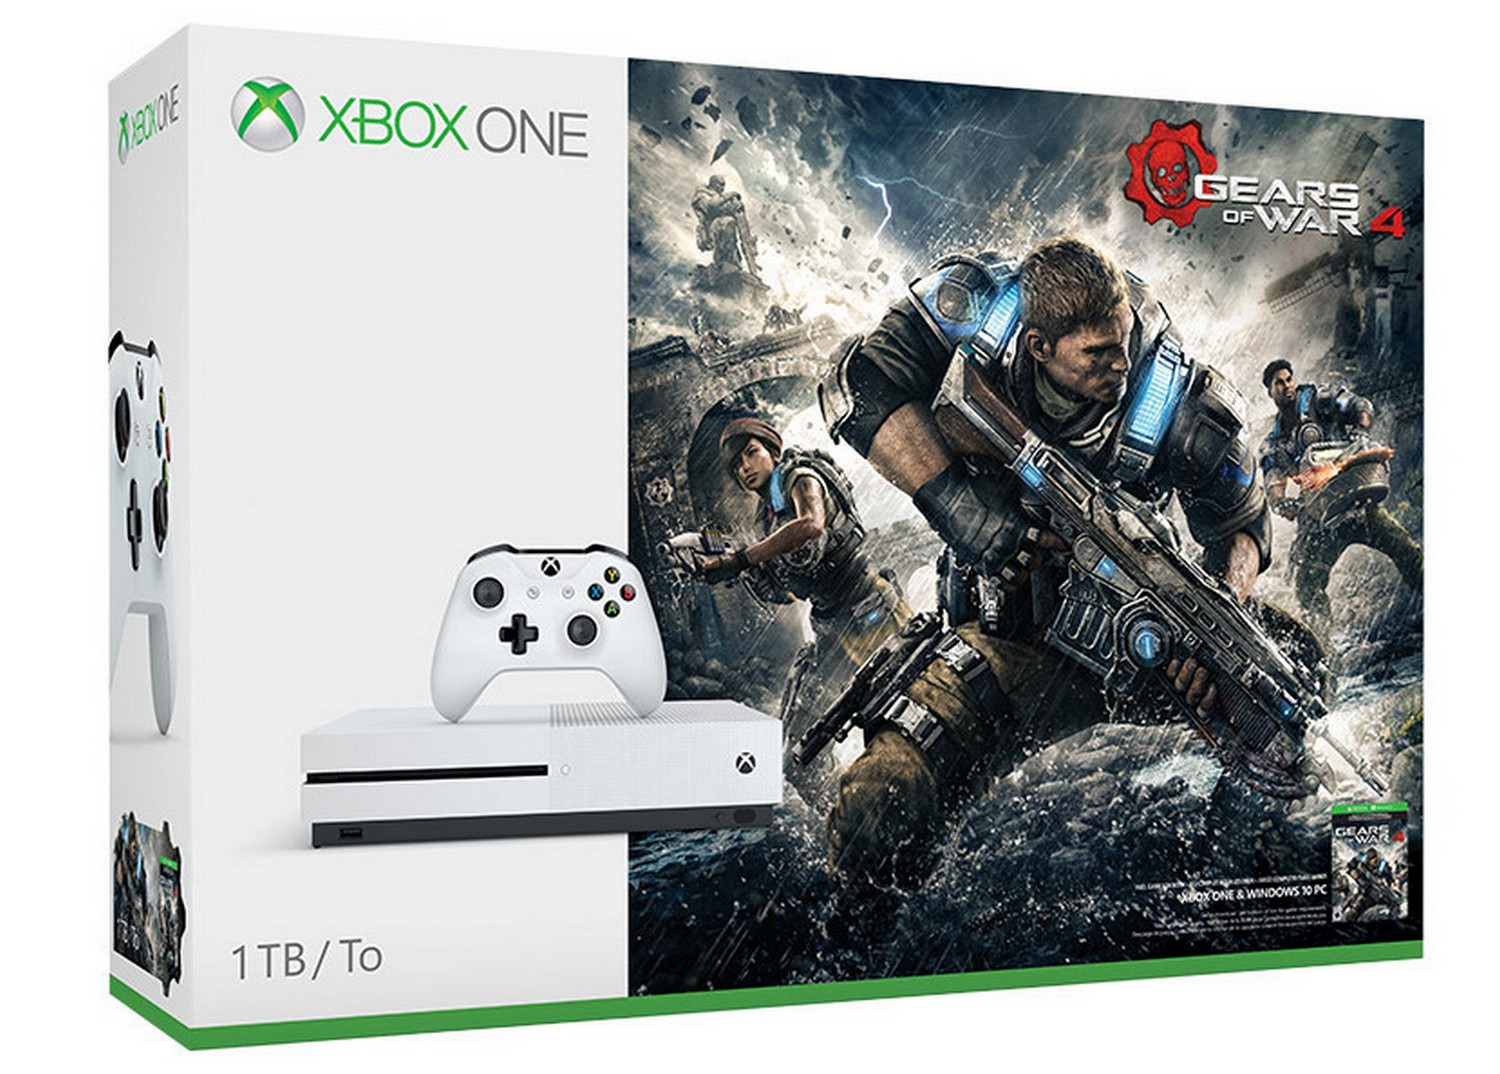 Xbox One S 1 TB - Gears of War 4 Digital Download Bundle